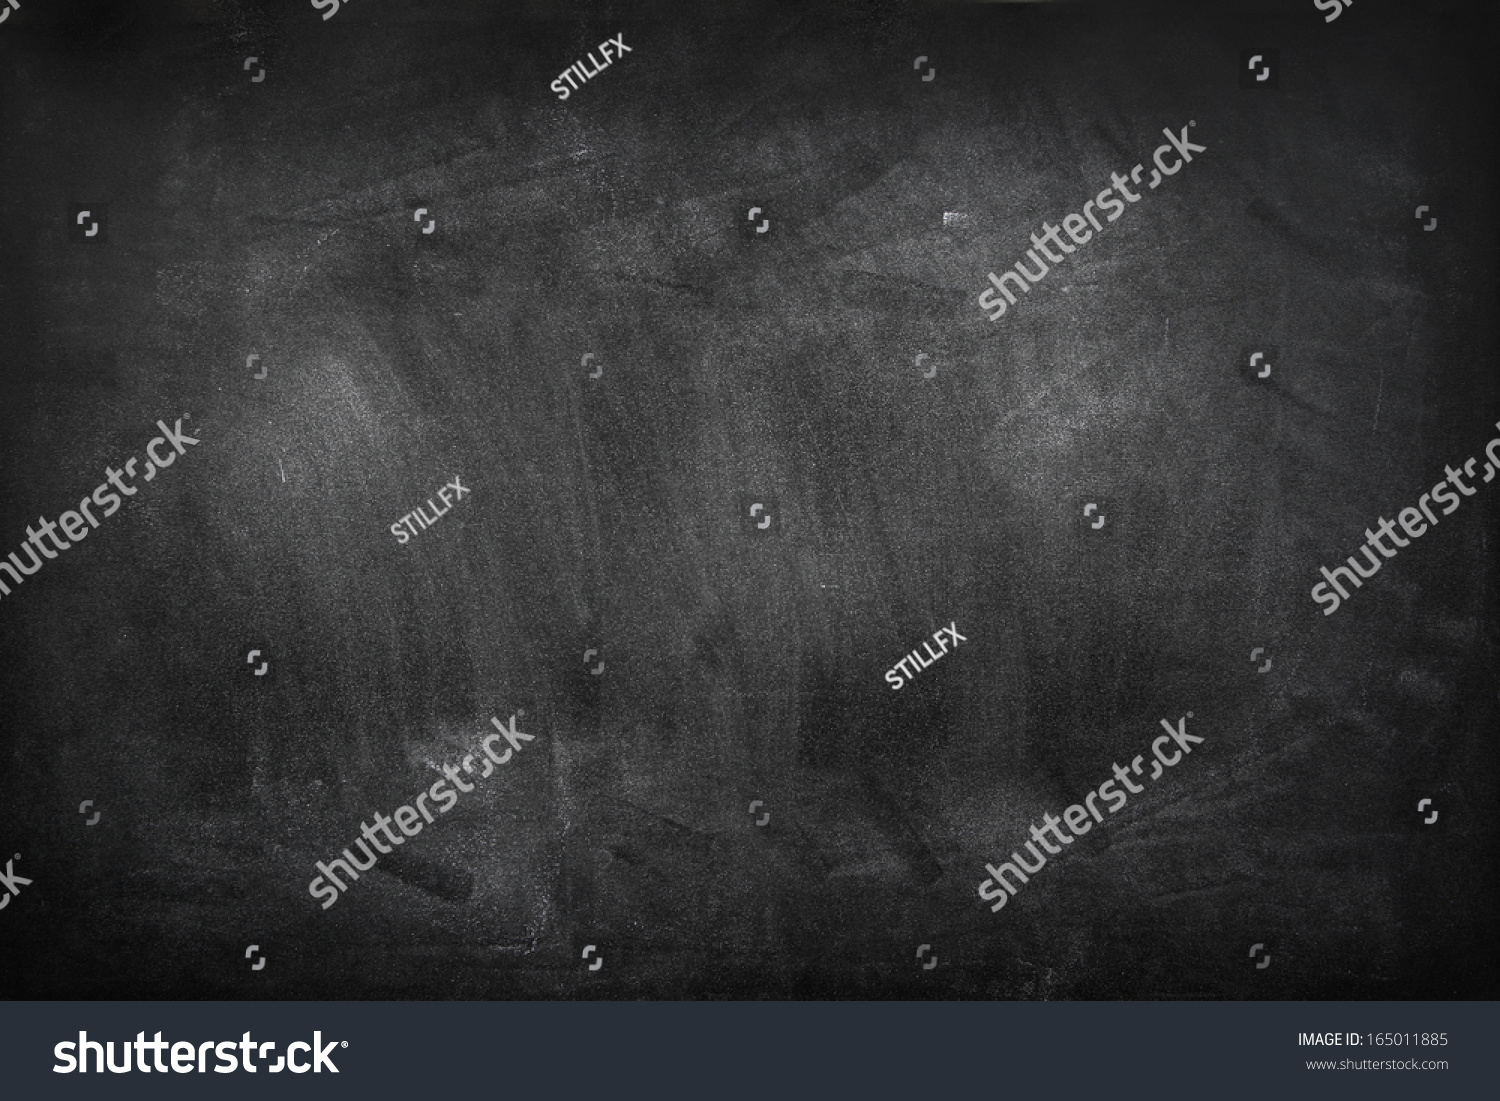 Chalk rubbed out on blackboard  #165011885